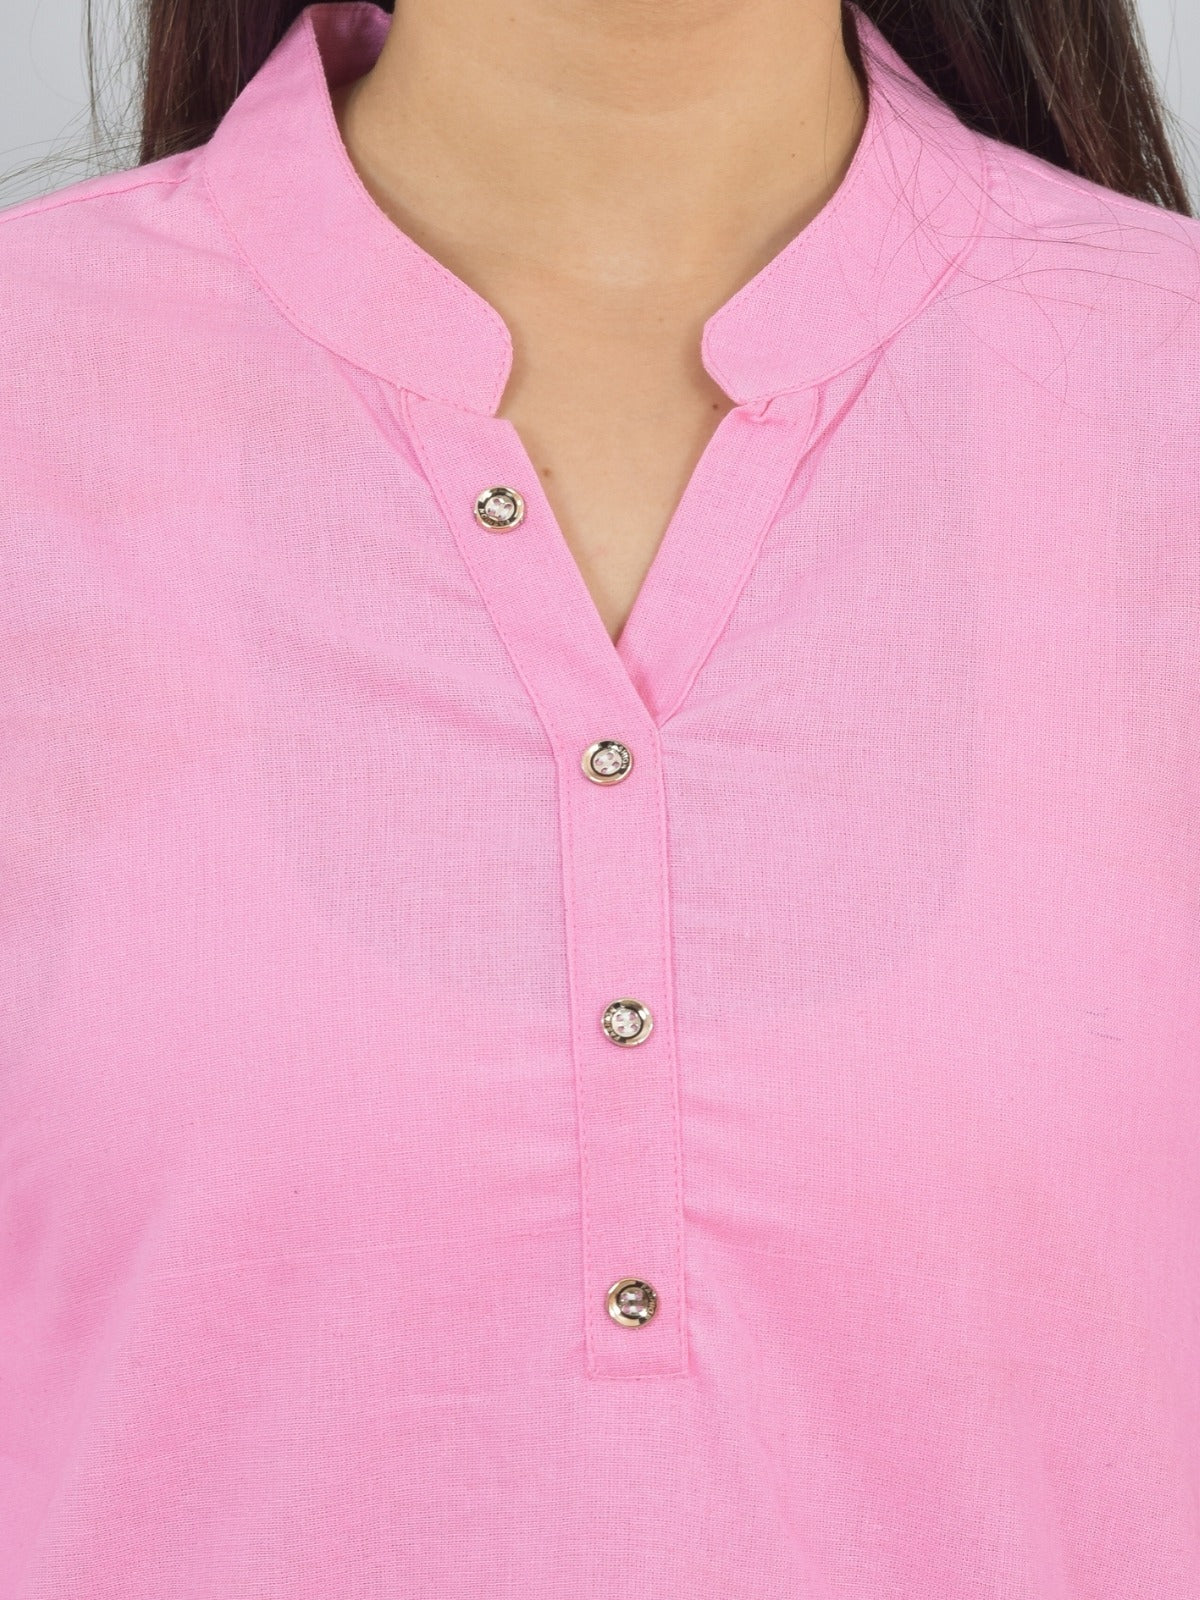 Quaclo Womens Solid Pink Cotton Top-Pyjama Co-Ords Set